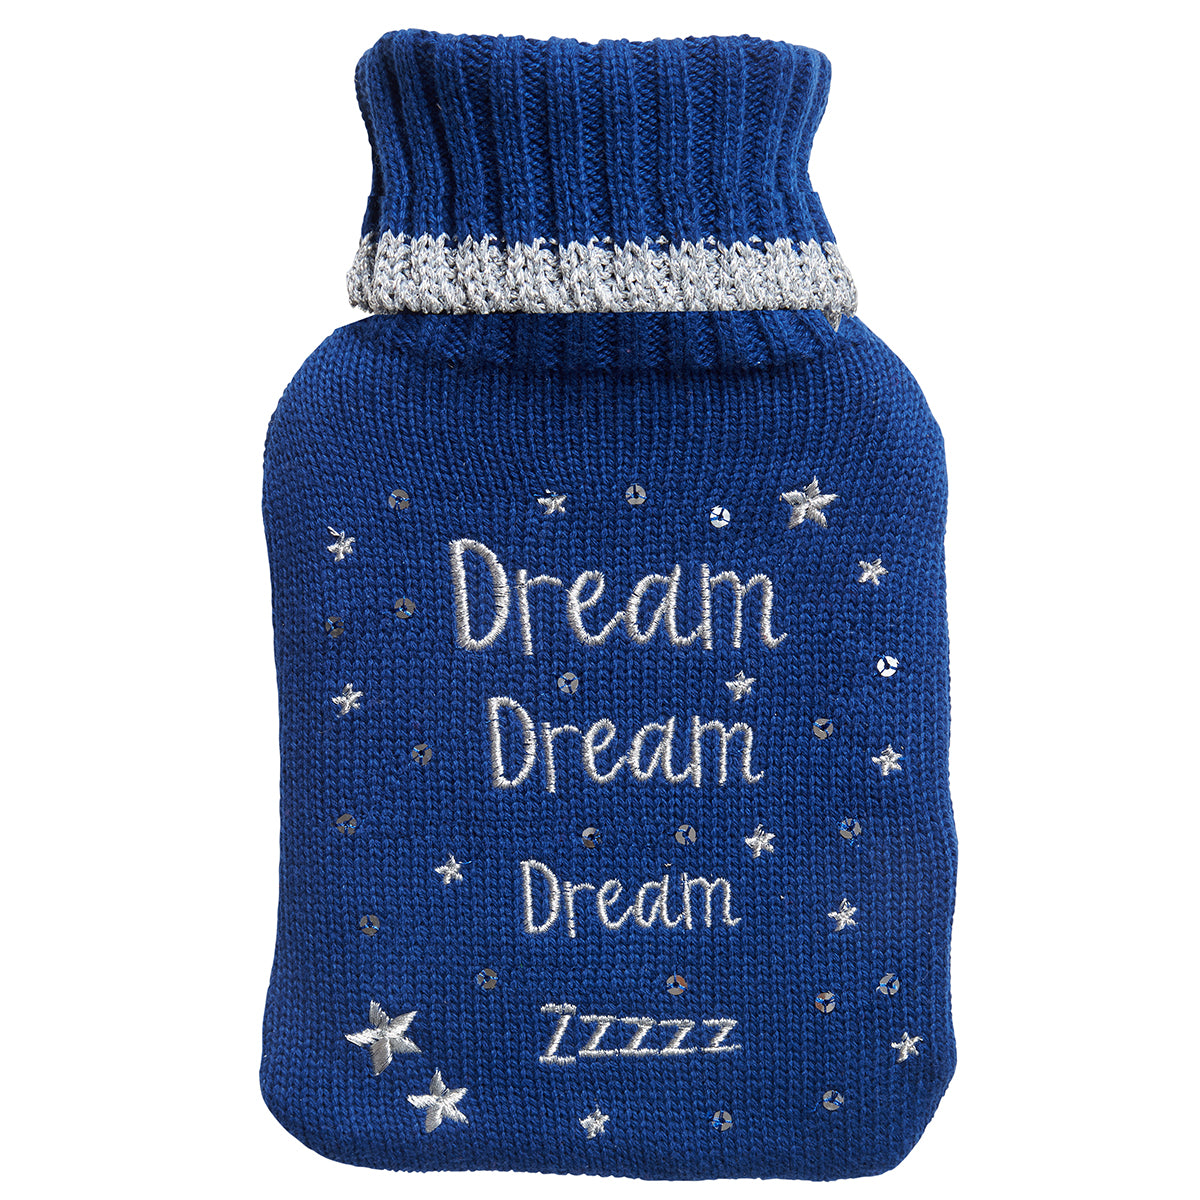 Dream Dream Dream Hot Water Bottle